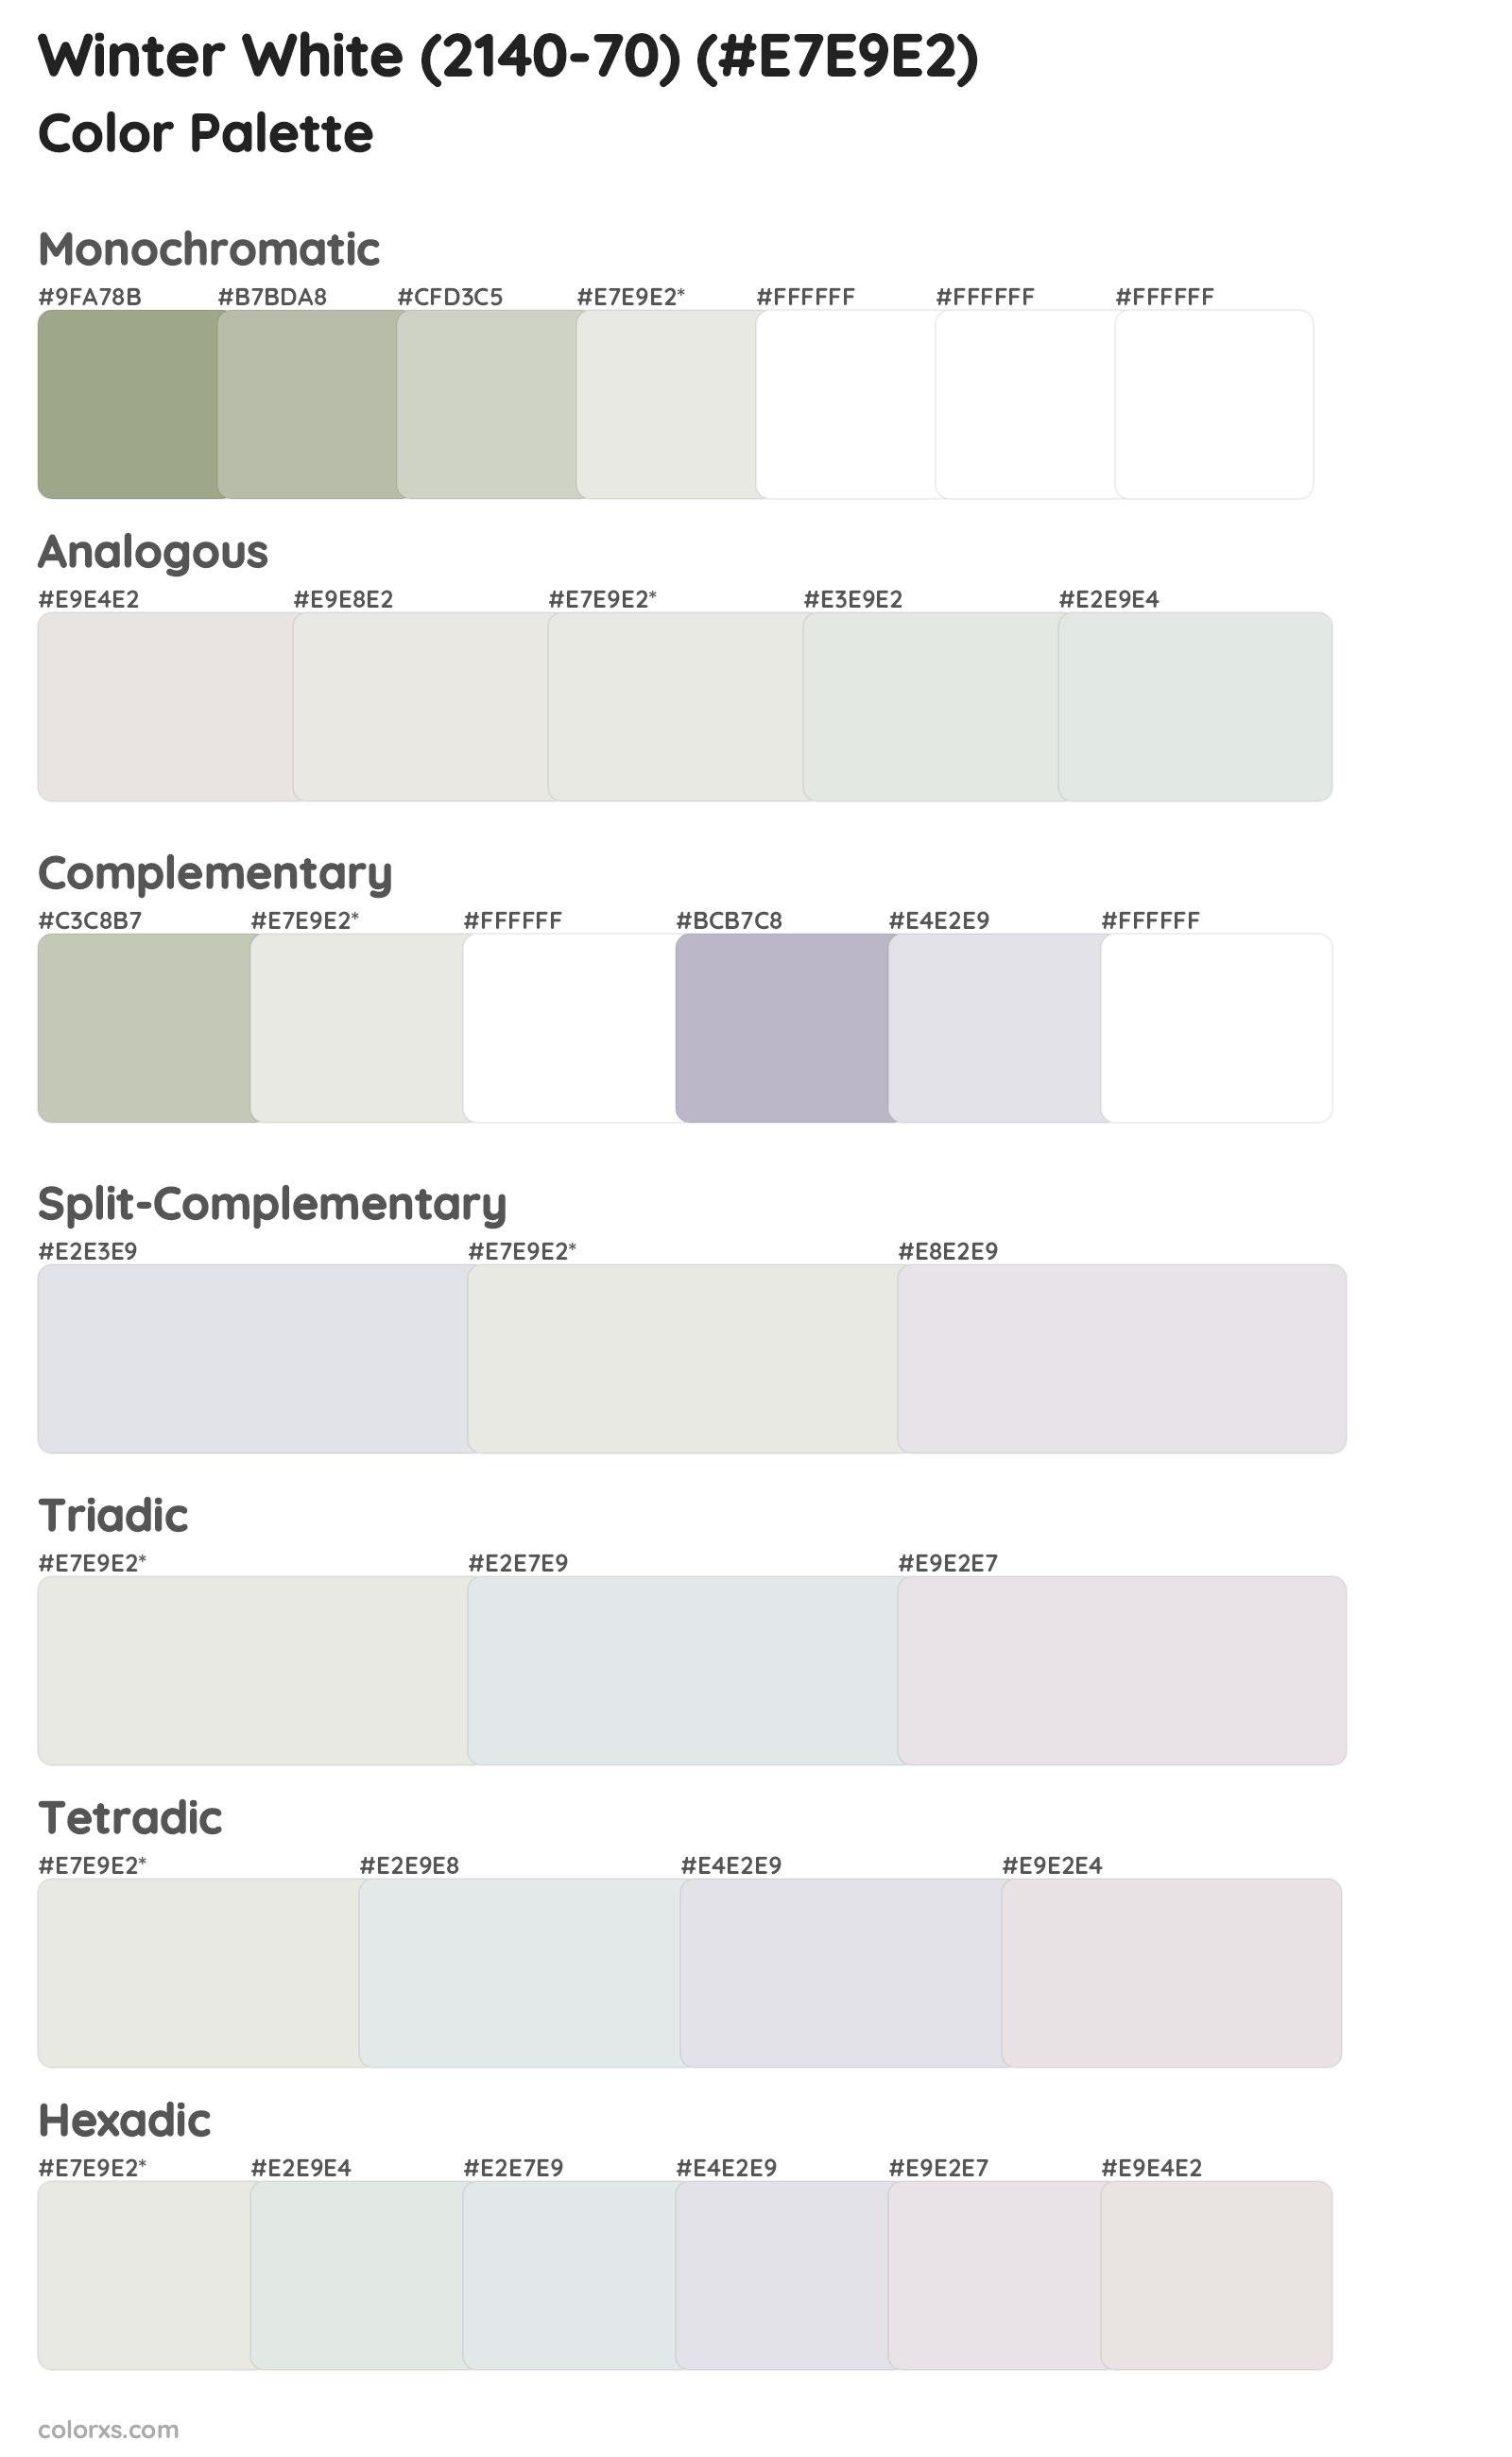 Winter White (2140-70) Color Scheme Palettes